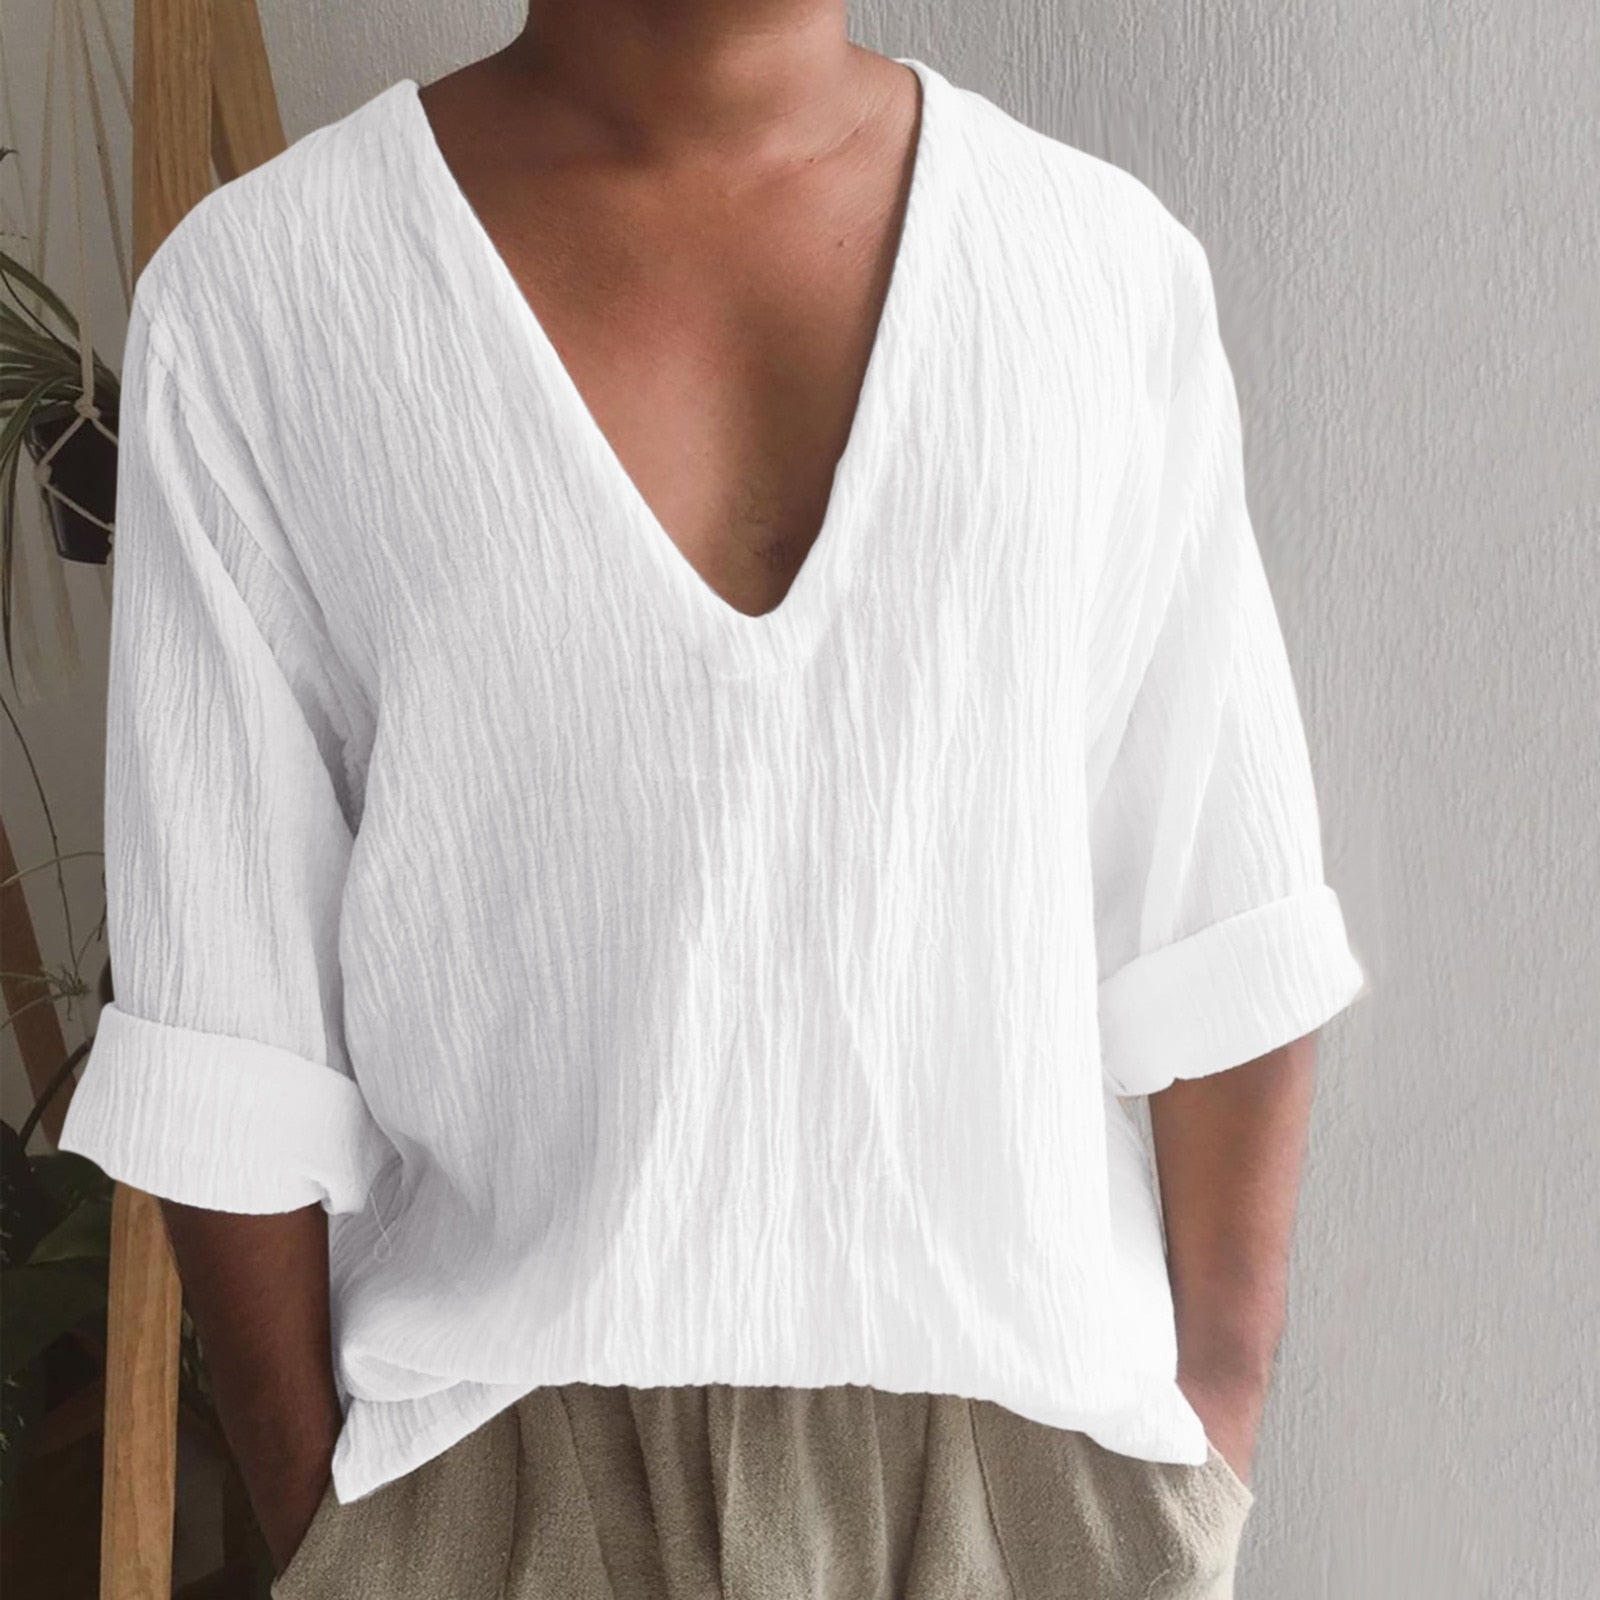 Meditation Clothes - Vintage Cotton Linen Shirt Men Breathable - V Neck Boho Style - Personal Hour for Yoga and Meditations 